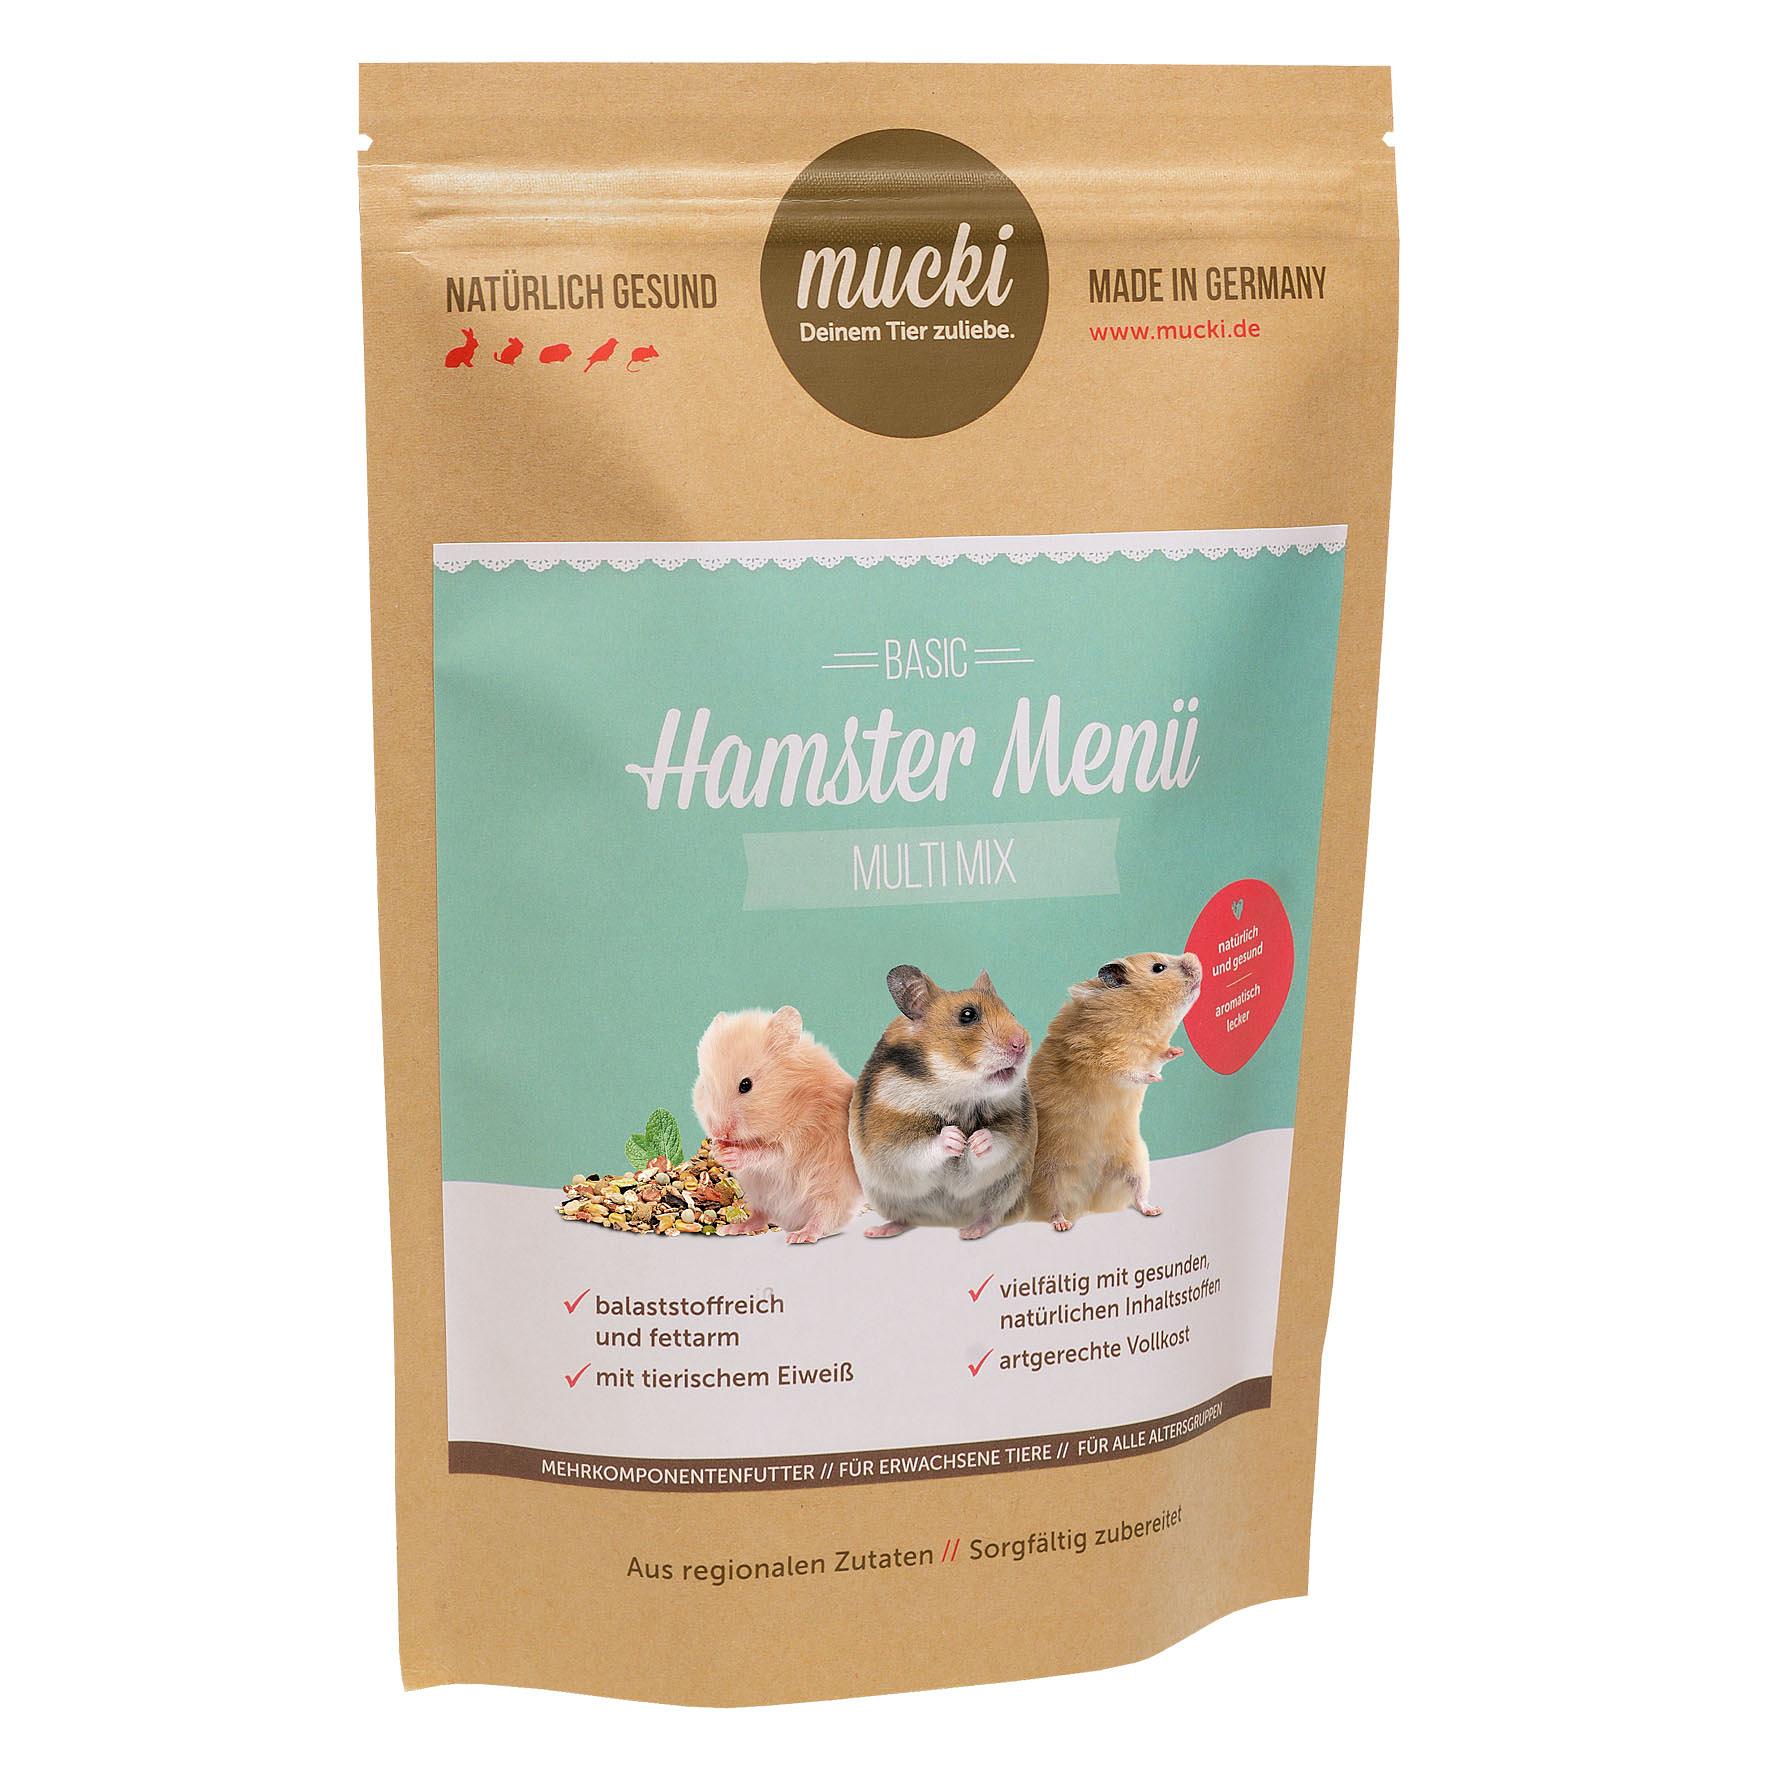 Mucki Menu pour hamster Multi Mix